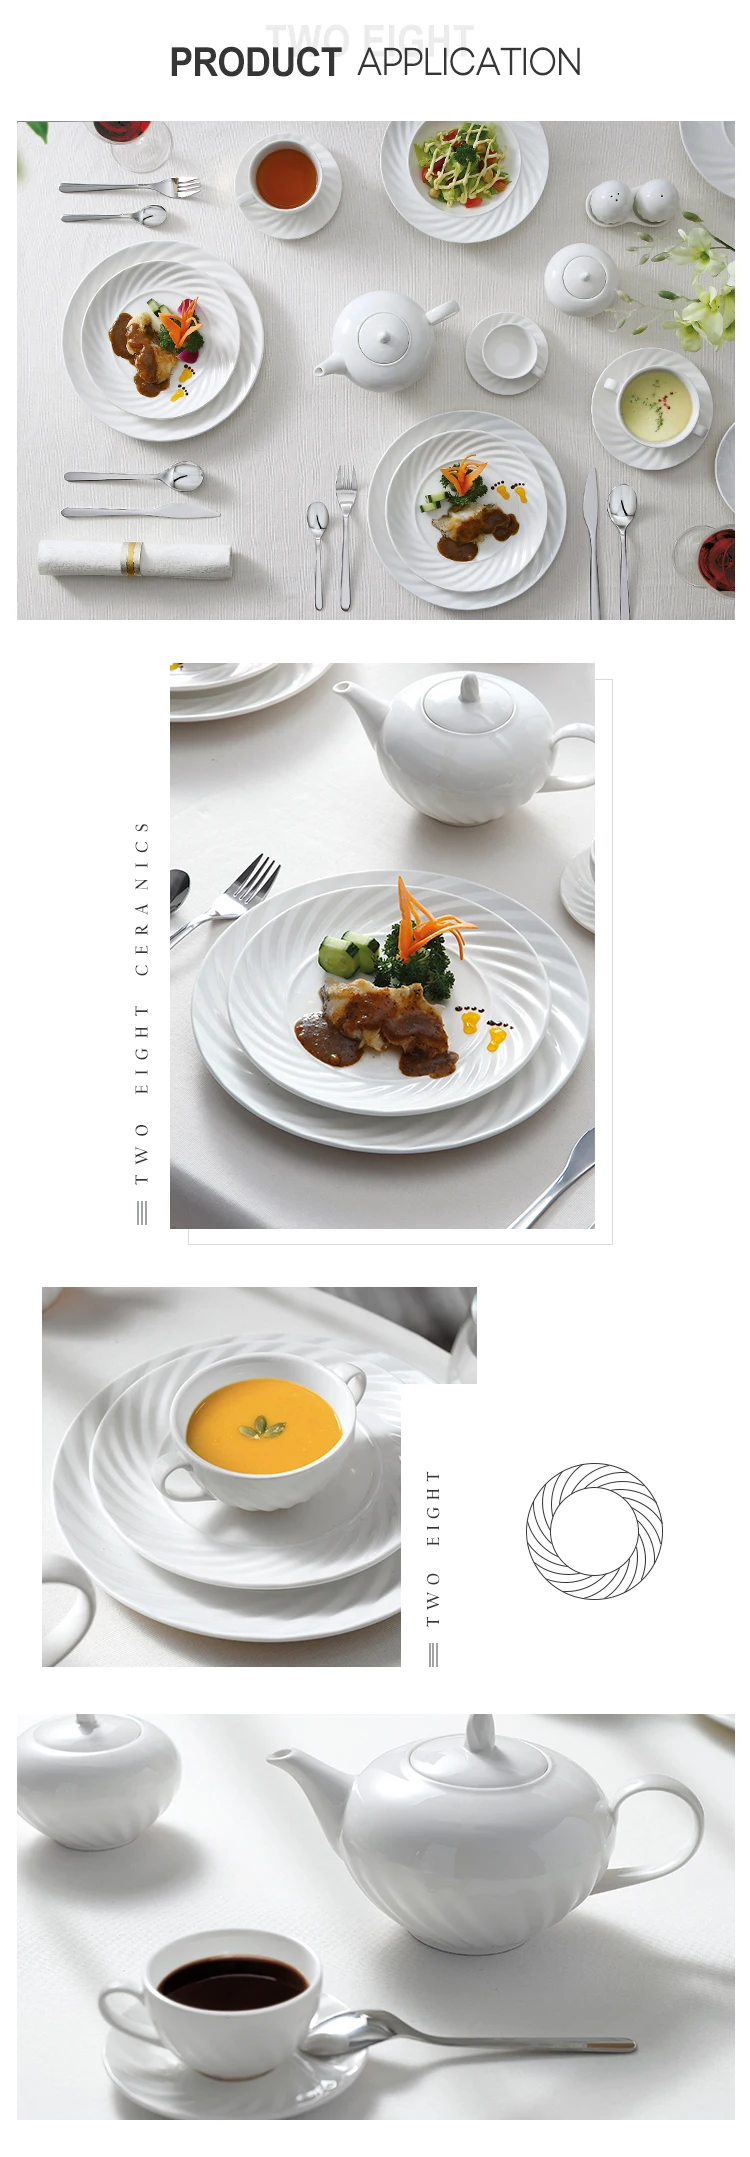 Dinner Sets Production Customized Hotel Dinnerware Porcelain Dinner Sets#